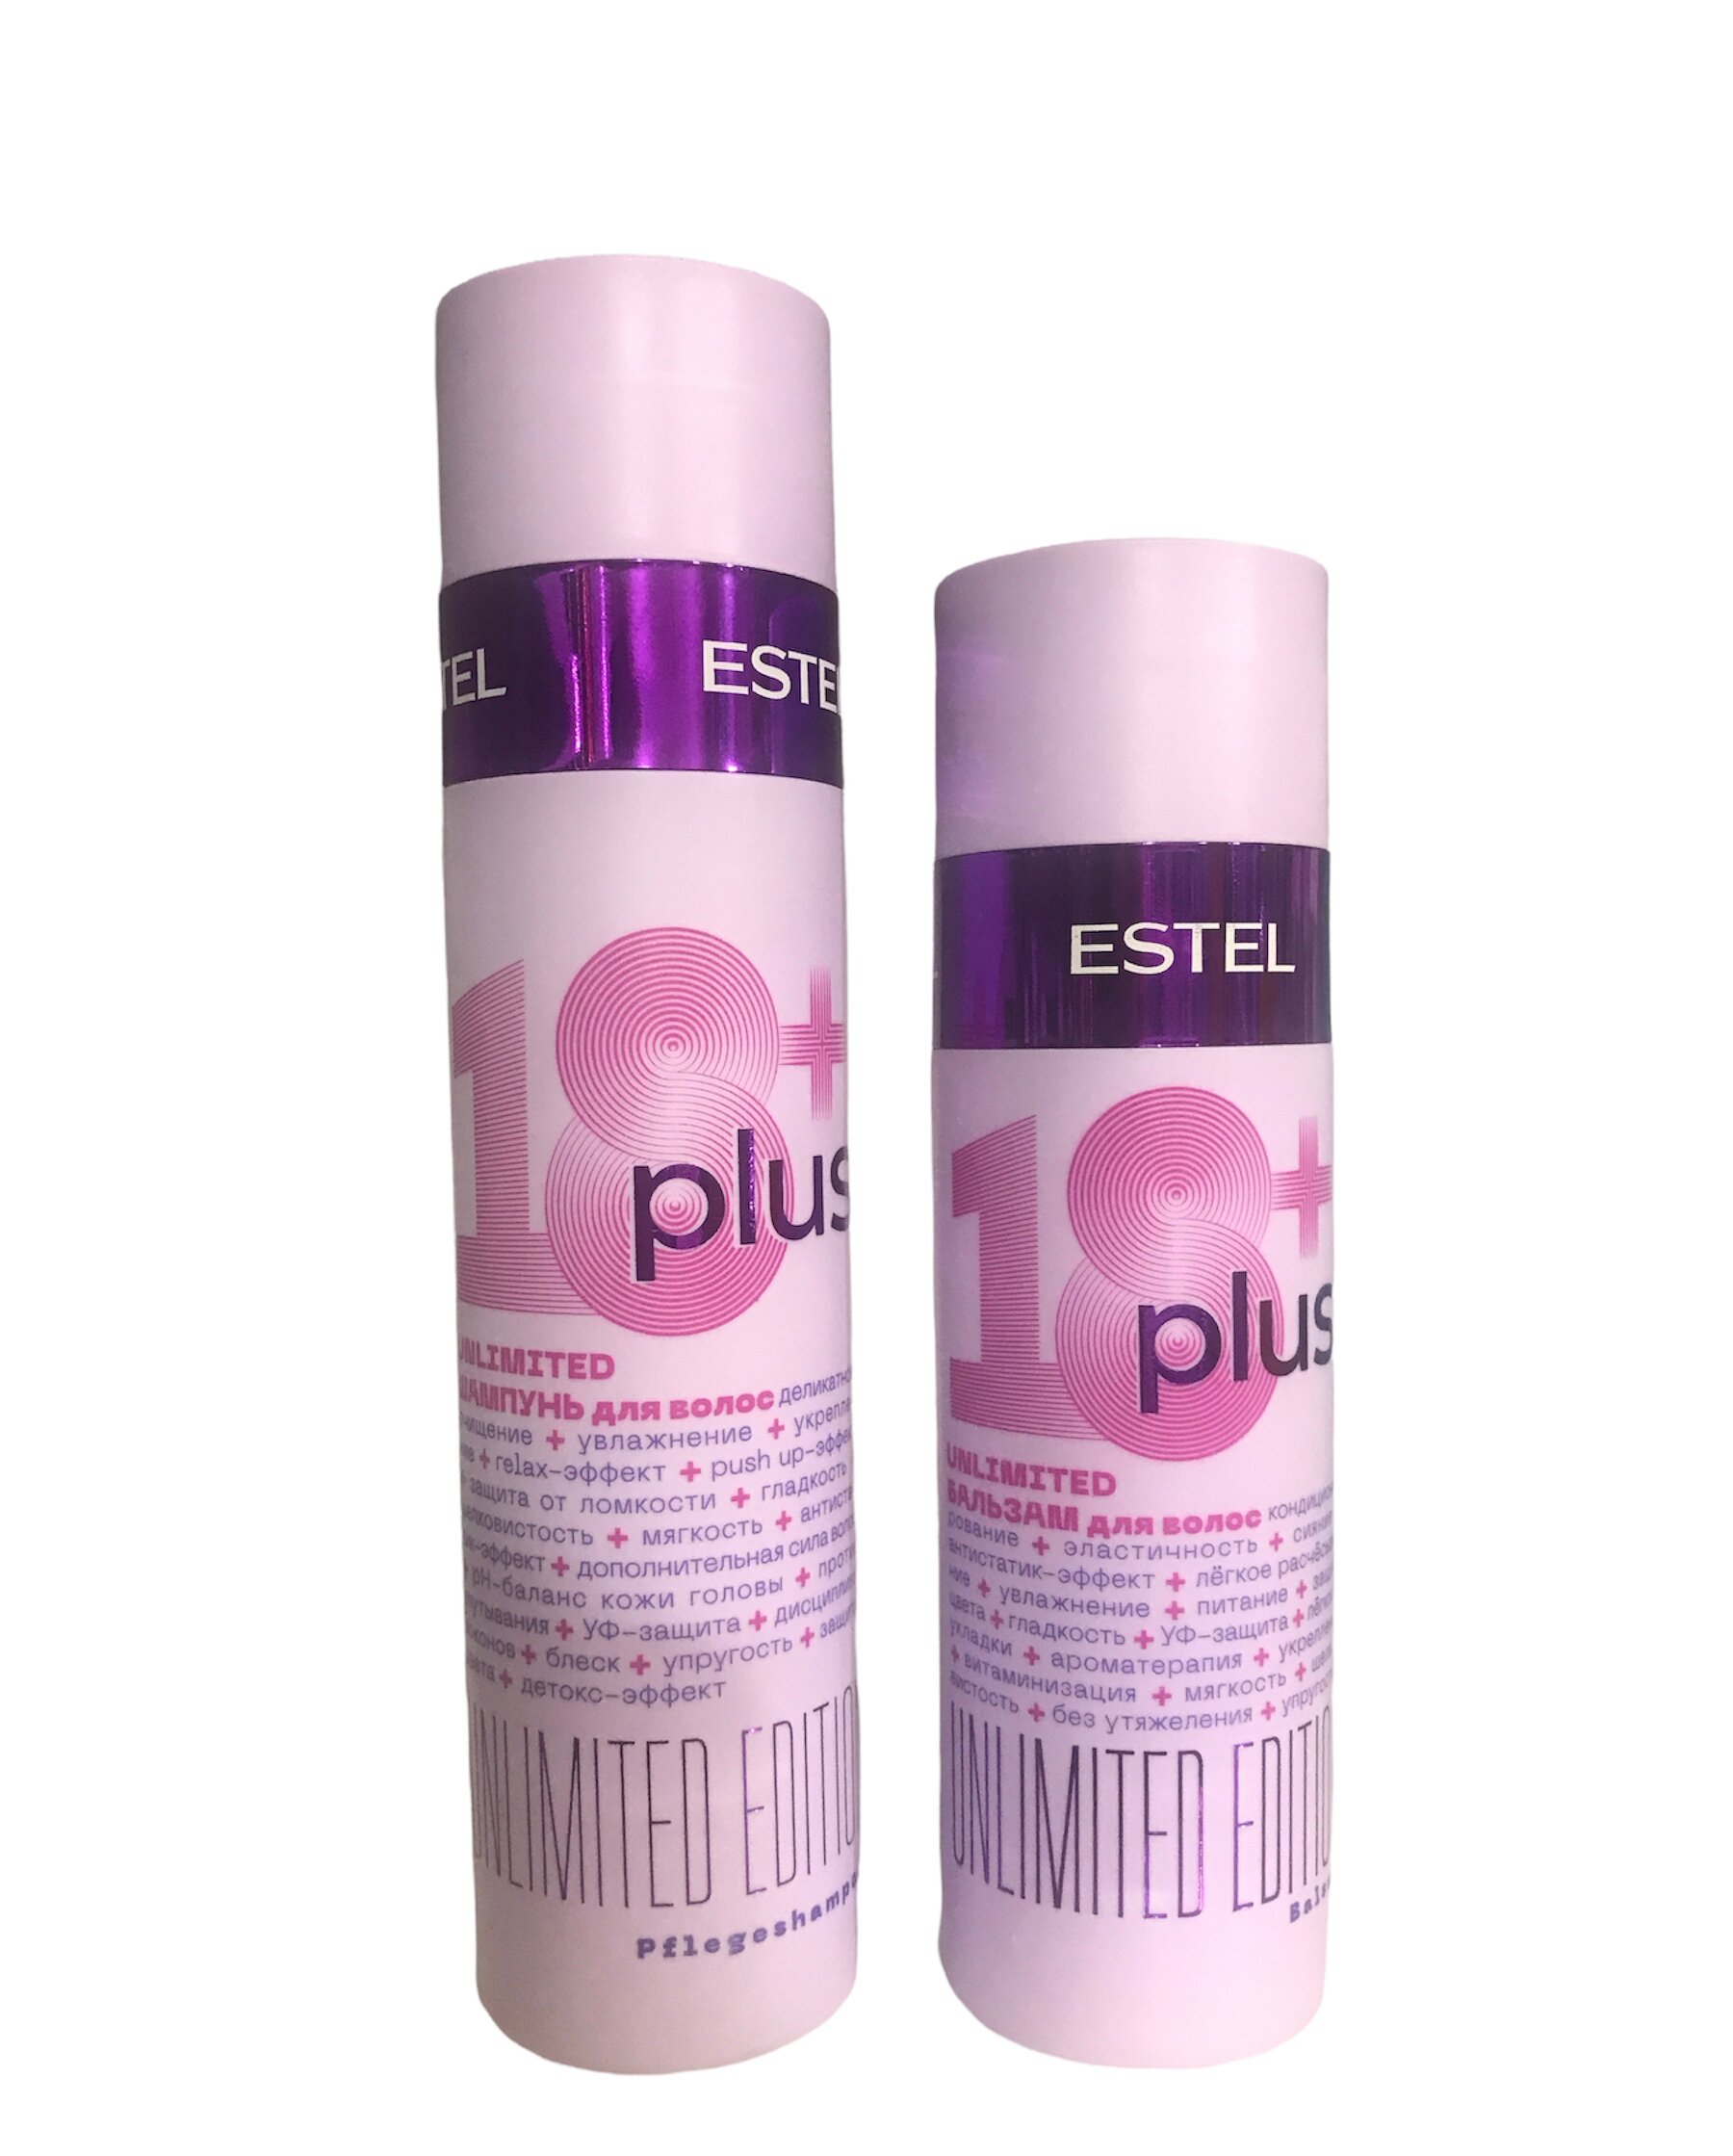 Набор ESTEL 18+ Plus набор для ухода за волосами шампунь 250 мл + бальзам 200 мл маска бальзам для ухода за волосами и проблемной кожей головы пк205 250 мл